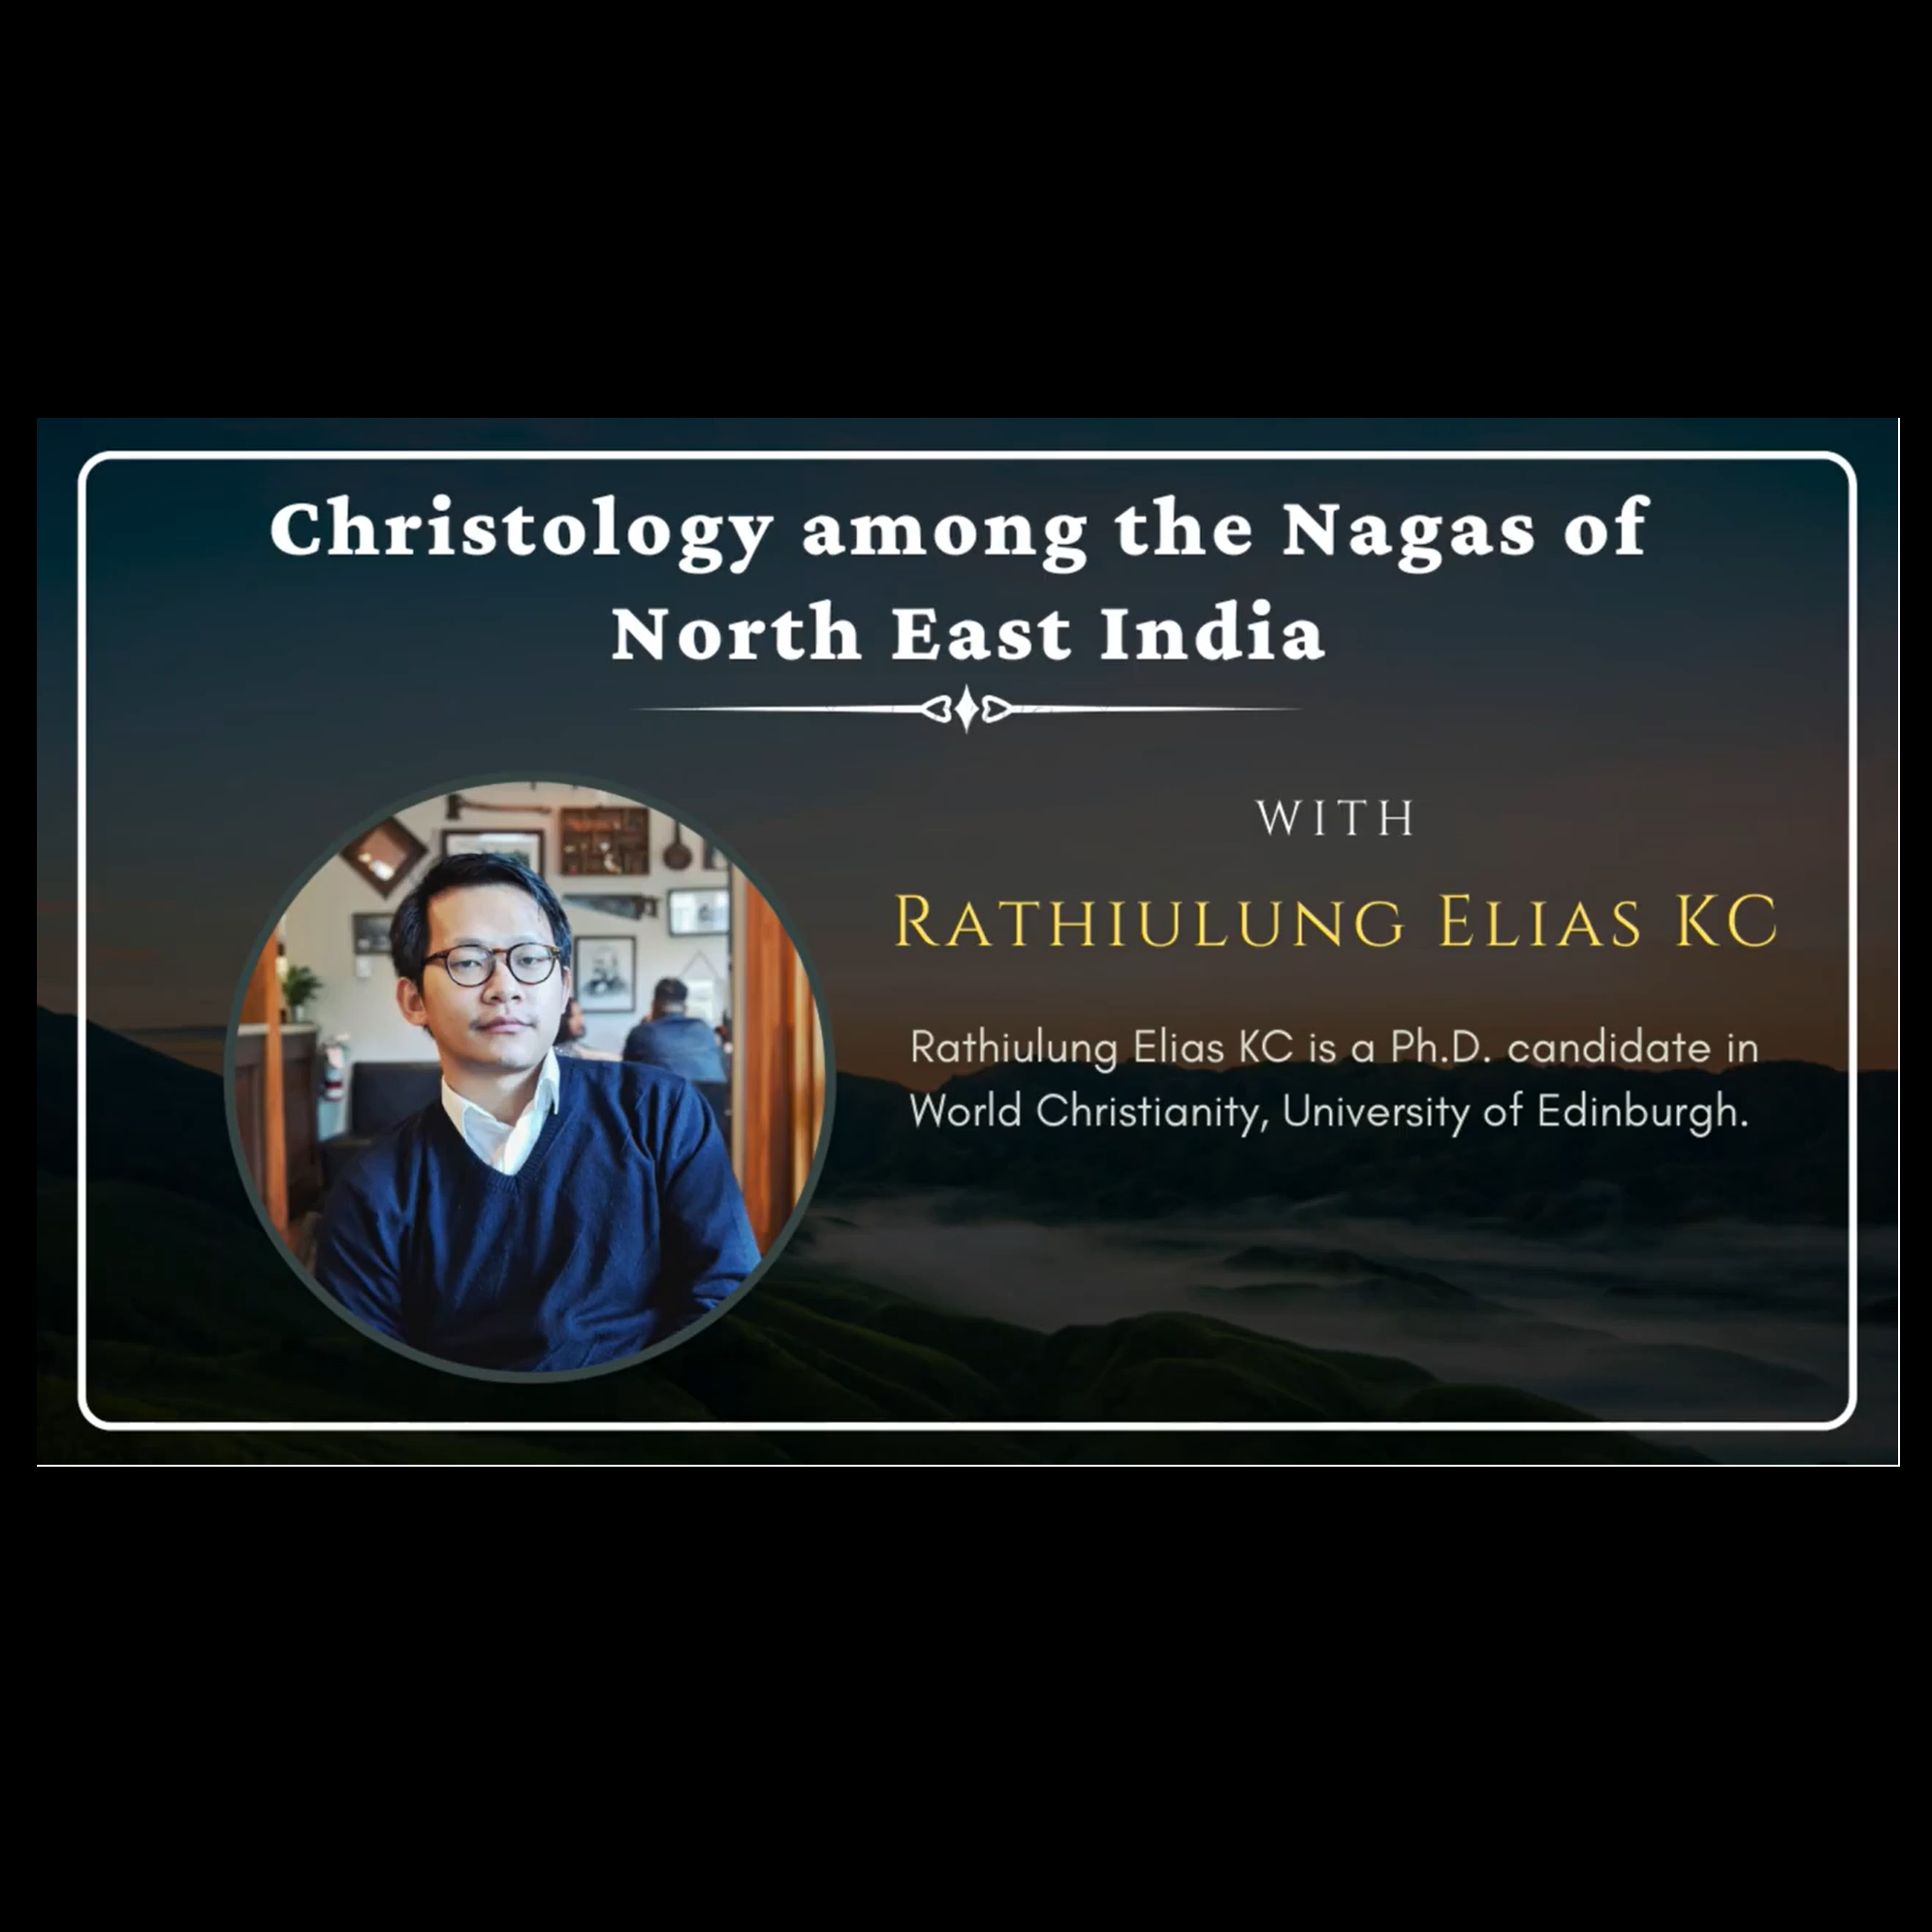 Tiatemsu Longkumer YouTube: Christology among the Nagas of NE India